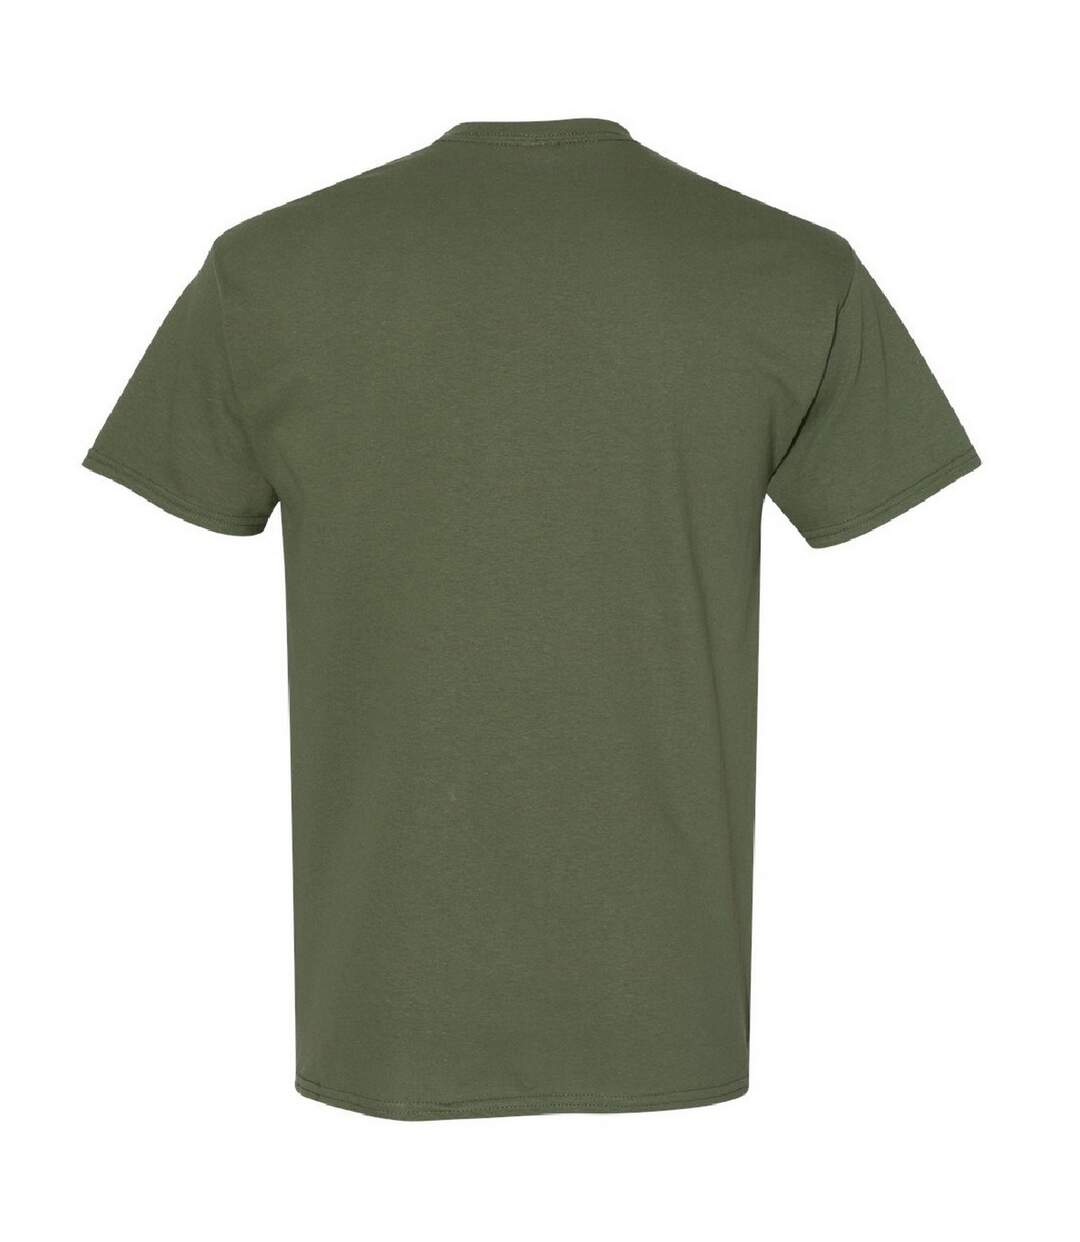 Gildan - T-shirt à manches courtes - Homme (Vert) - UTBC481